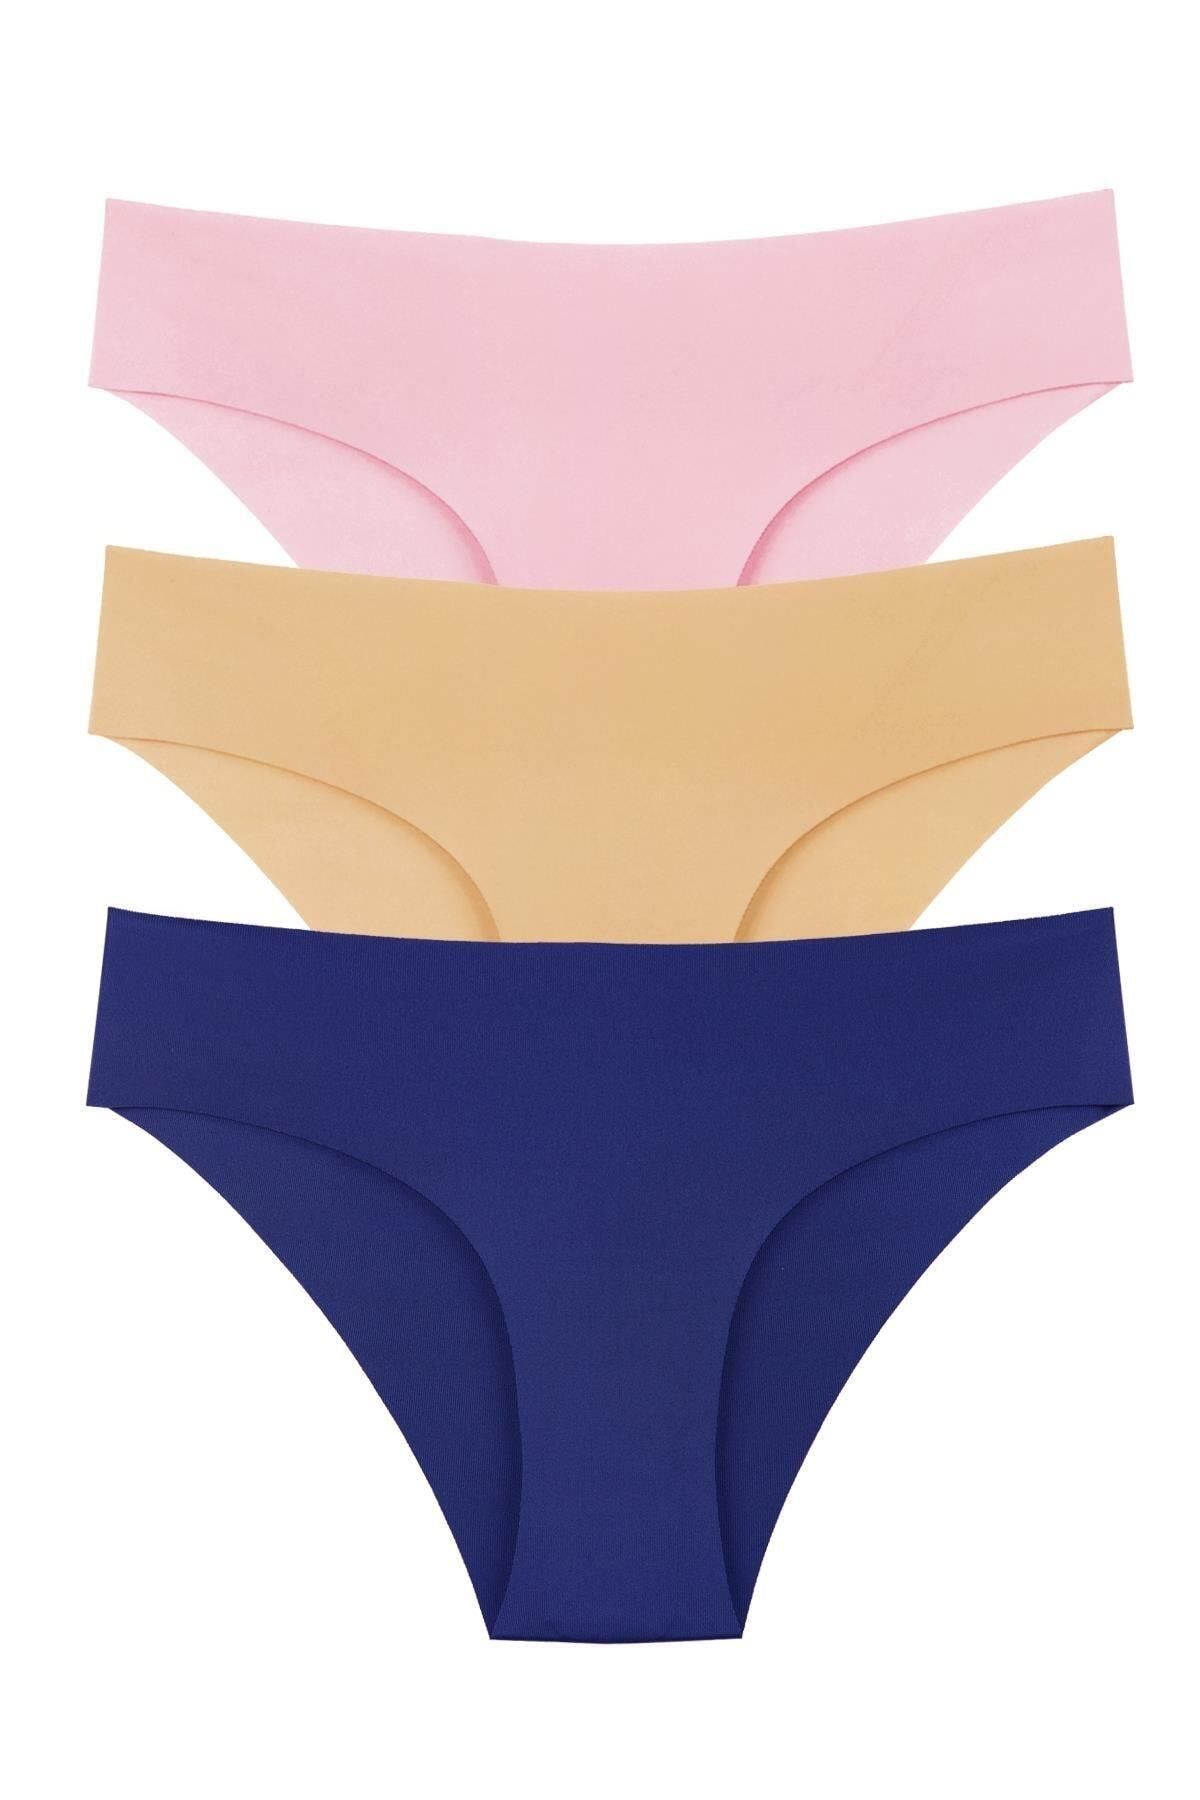 Sensu Women's Laser Cut Lycra Panties 3 Pack Set - Trendyol